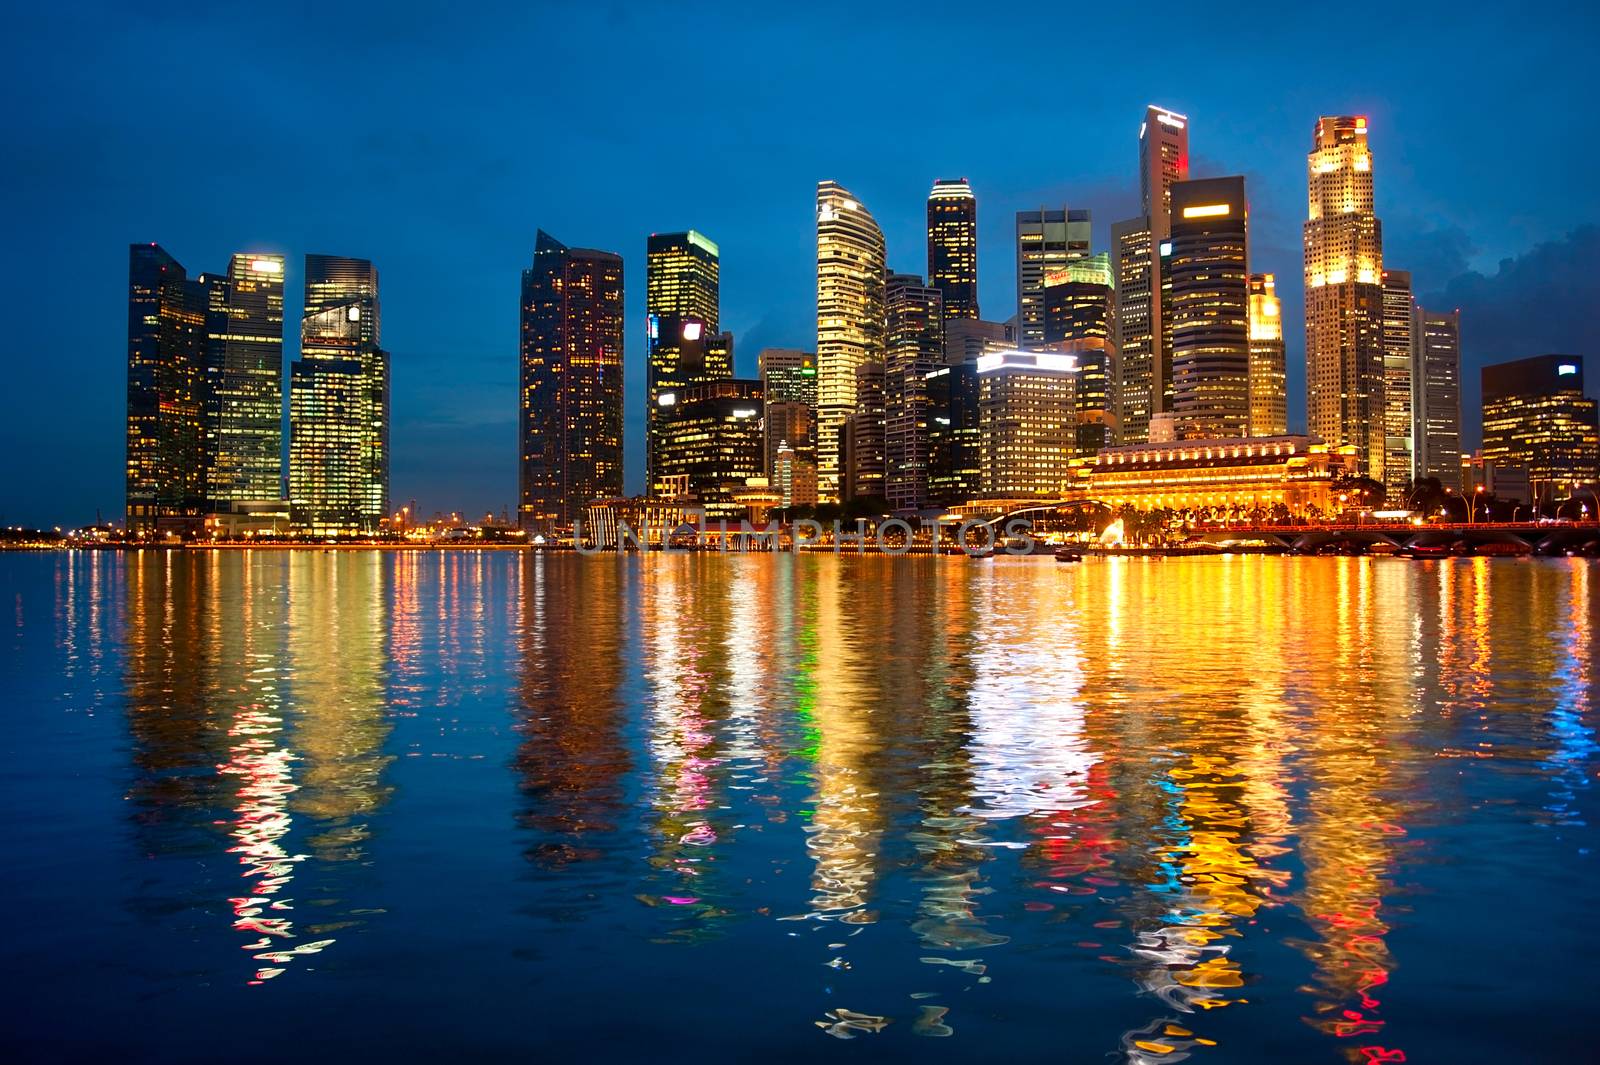 Skyline of Singapore by joyfull